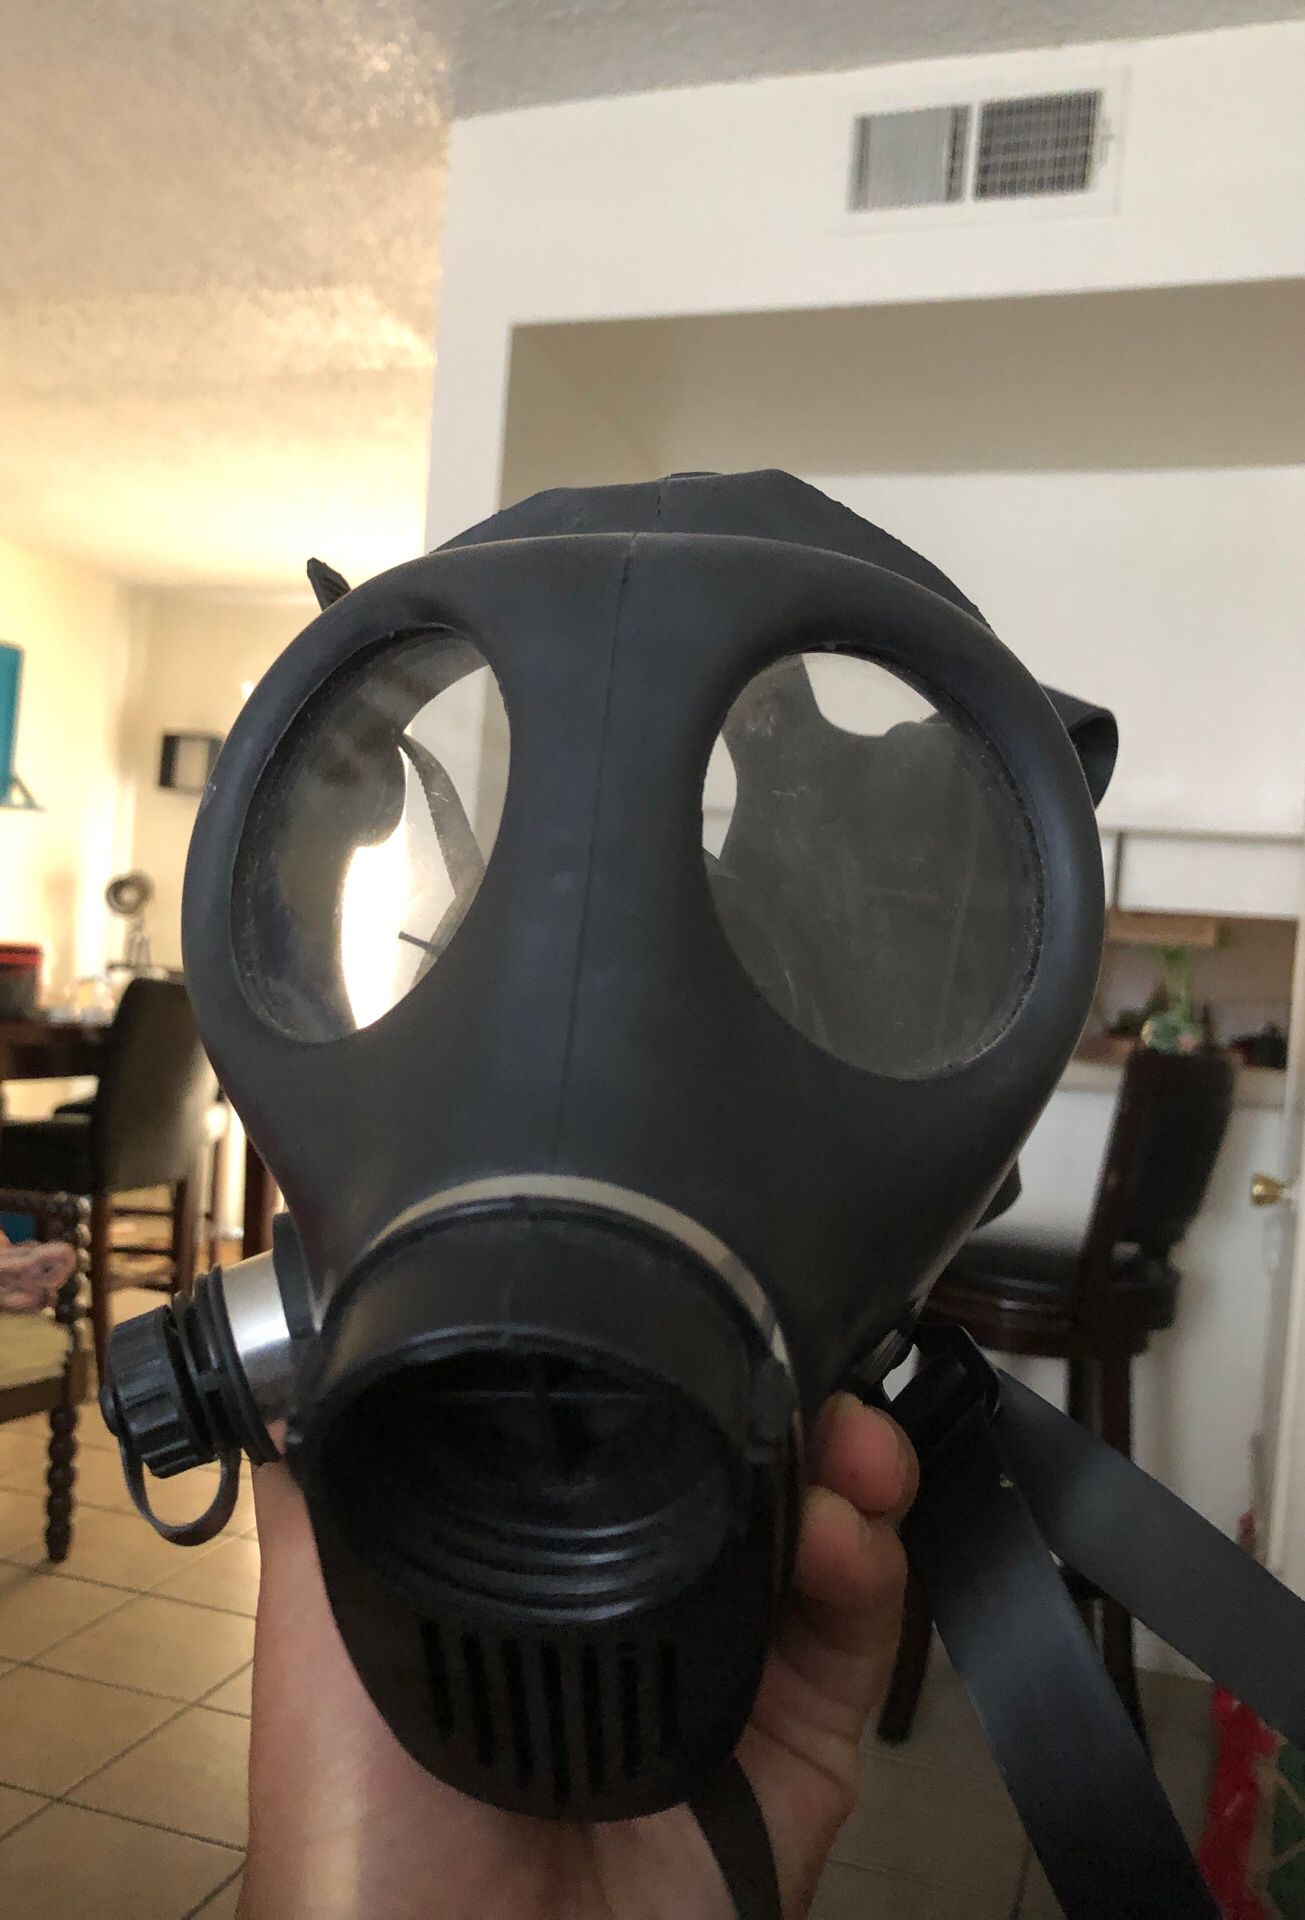 Like new gas mask! Gotta go